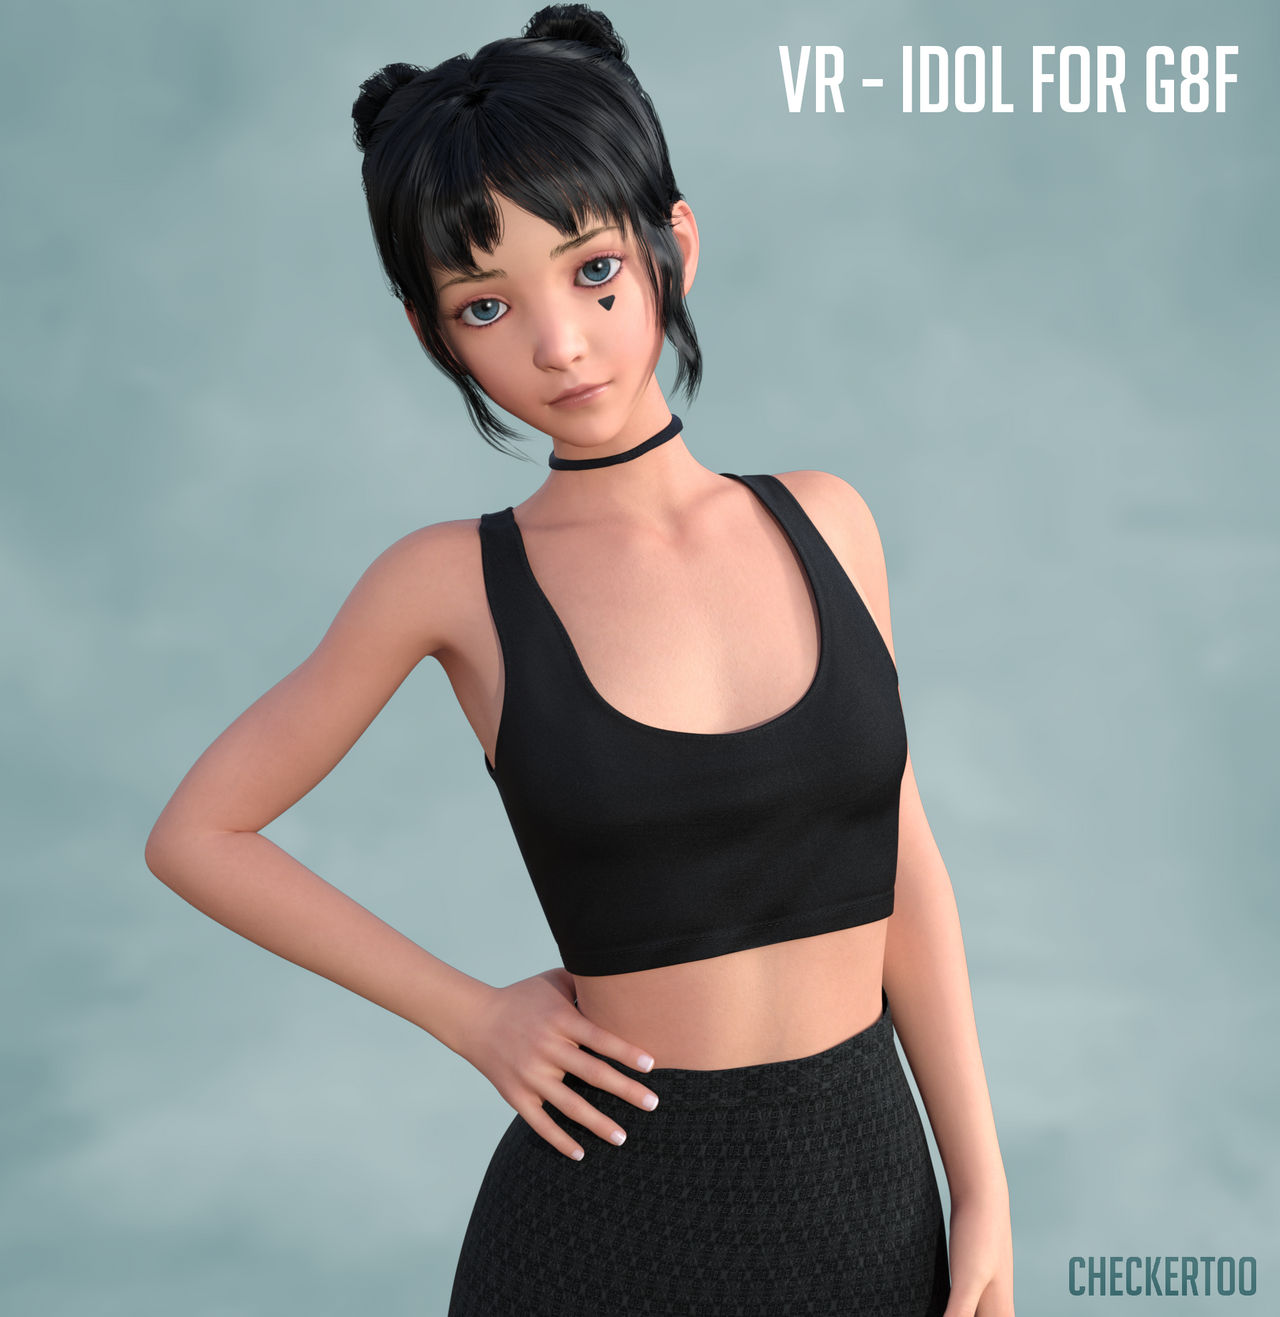 VR - Idol For G8F by CheckerToo on DeviantArt